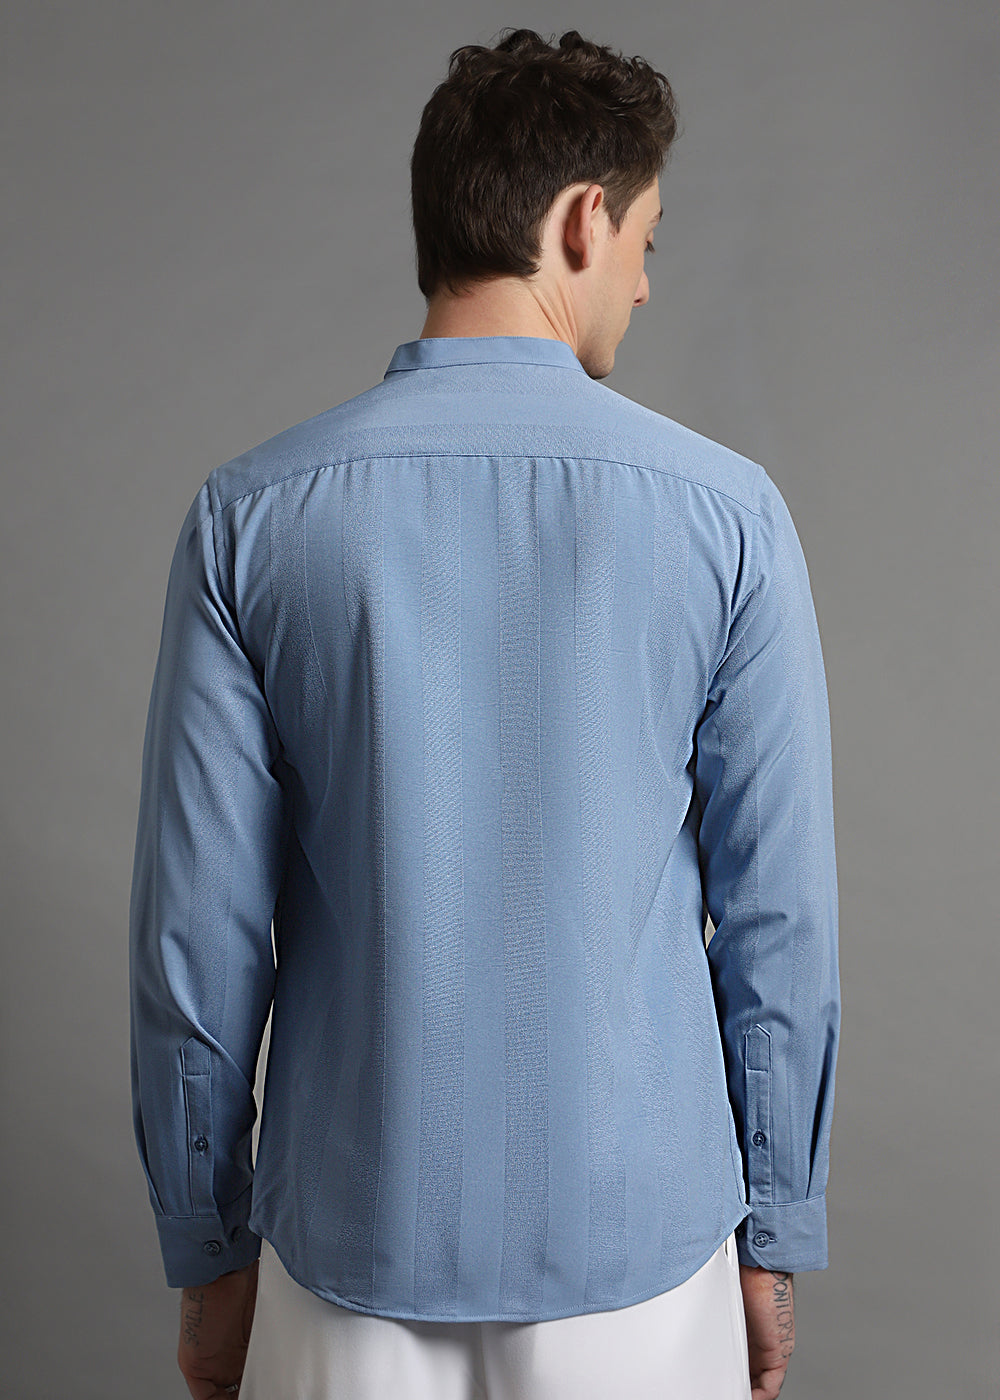 Aqua Blue Shein Patterned Shirt